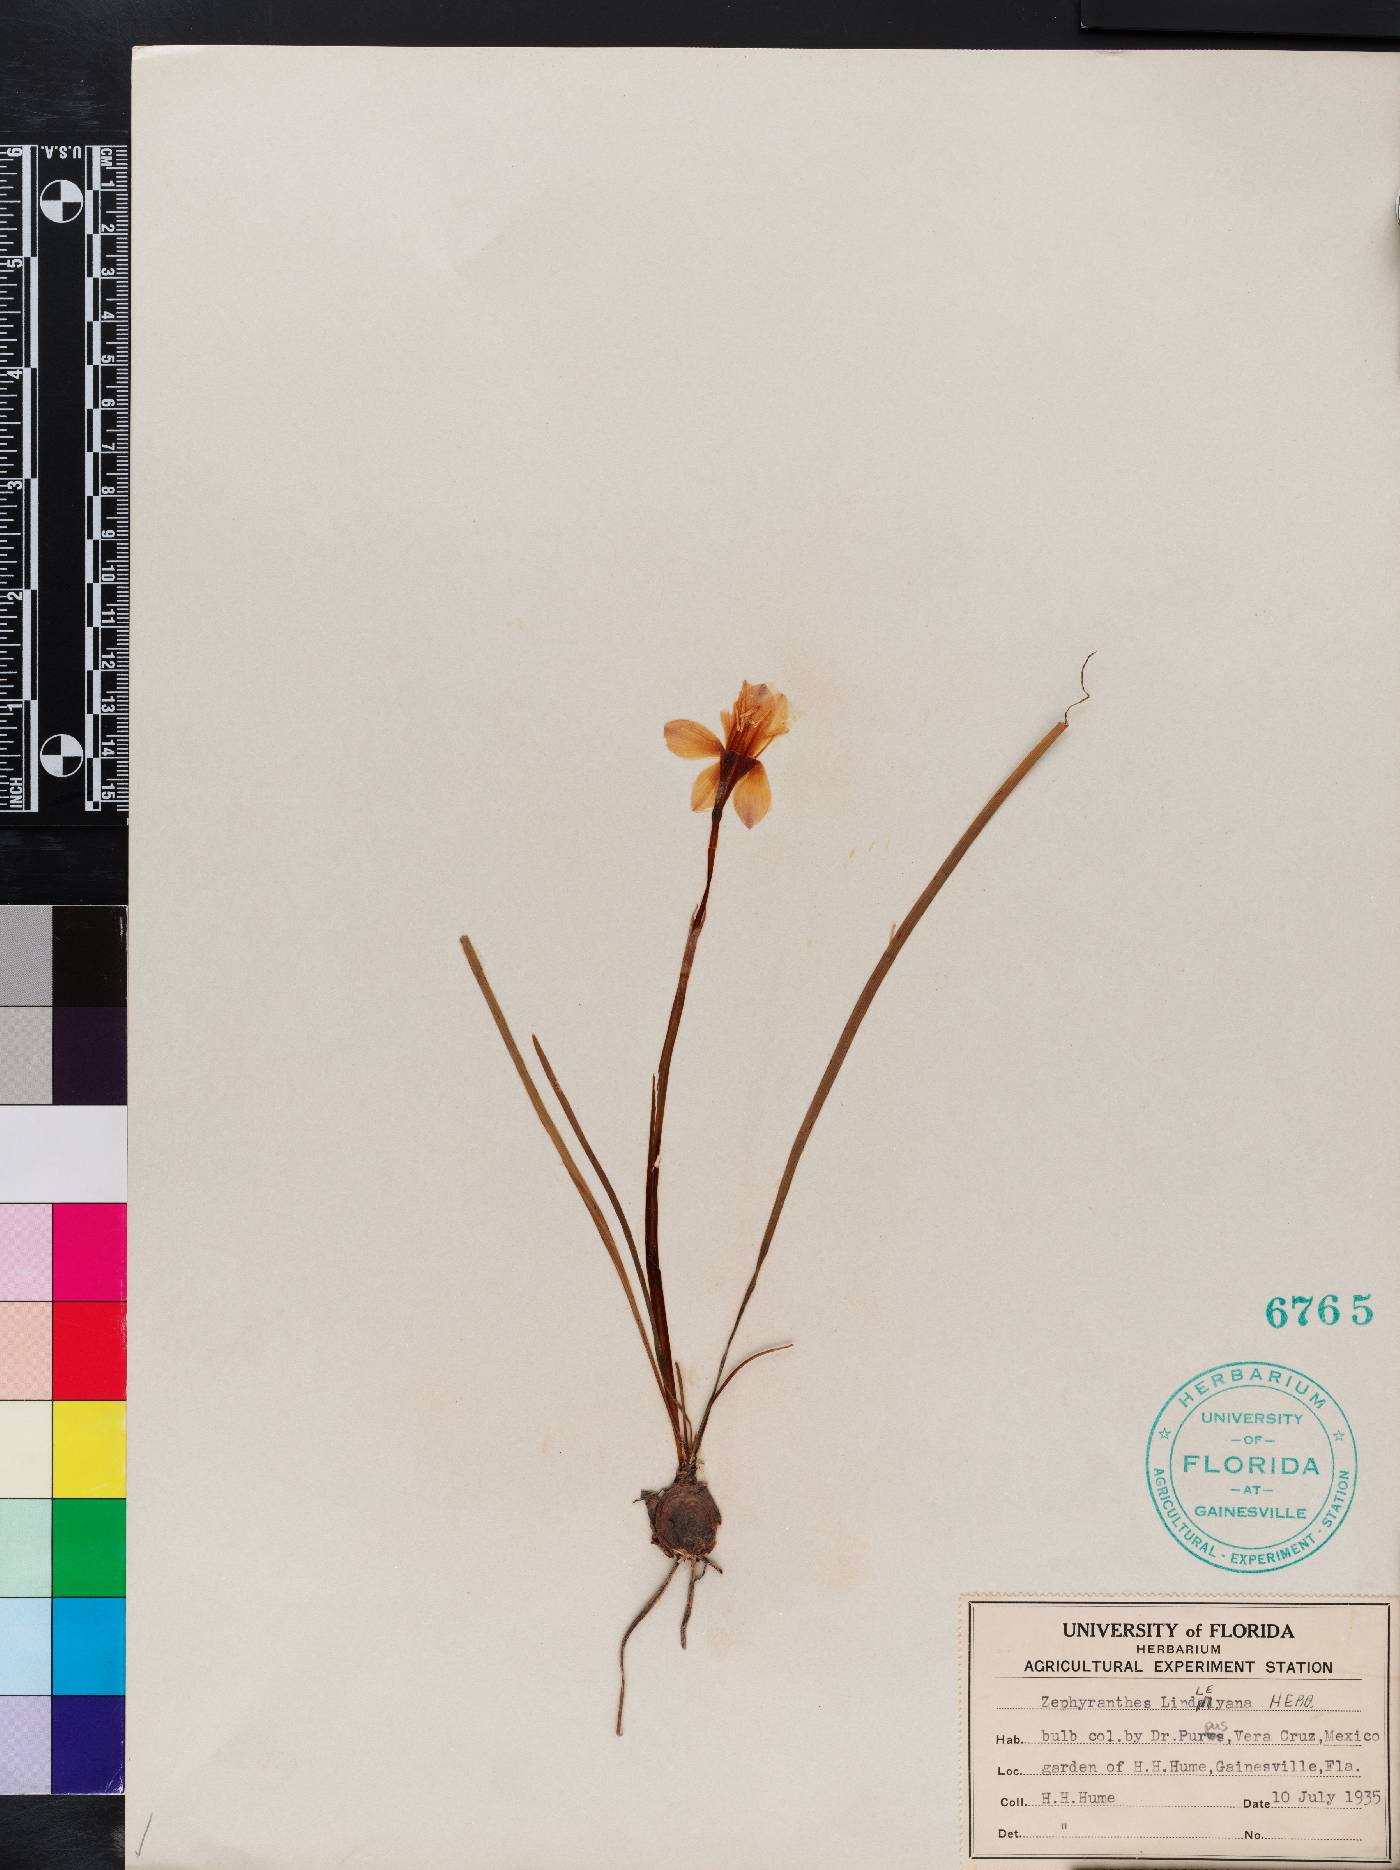 Zephyranthes lindleyana image